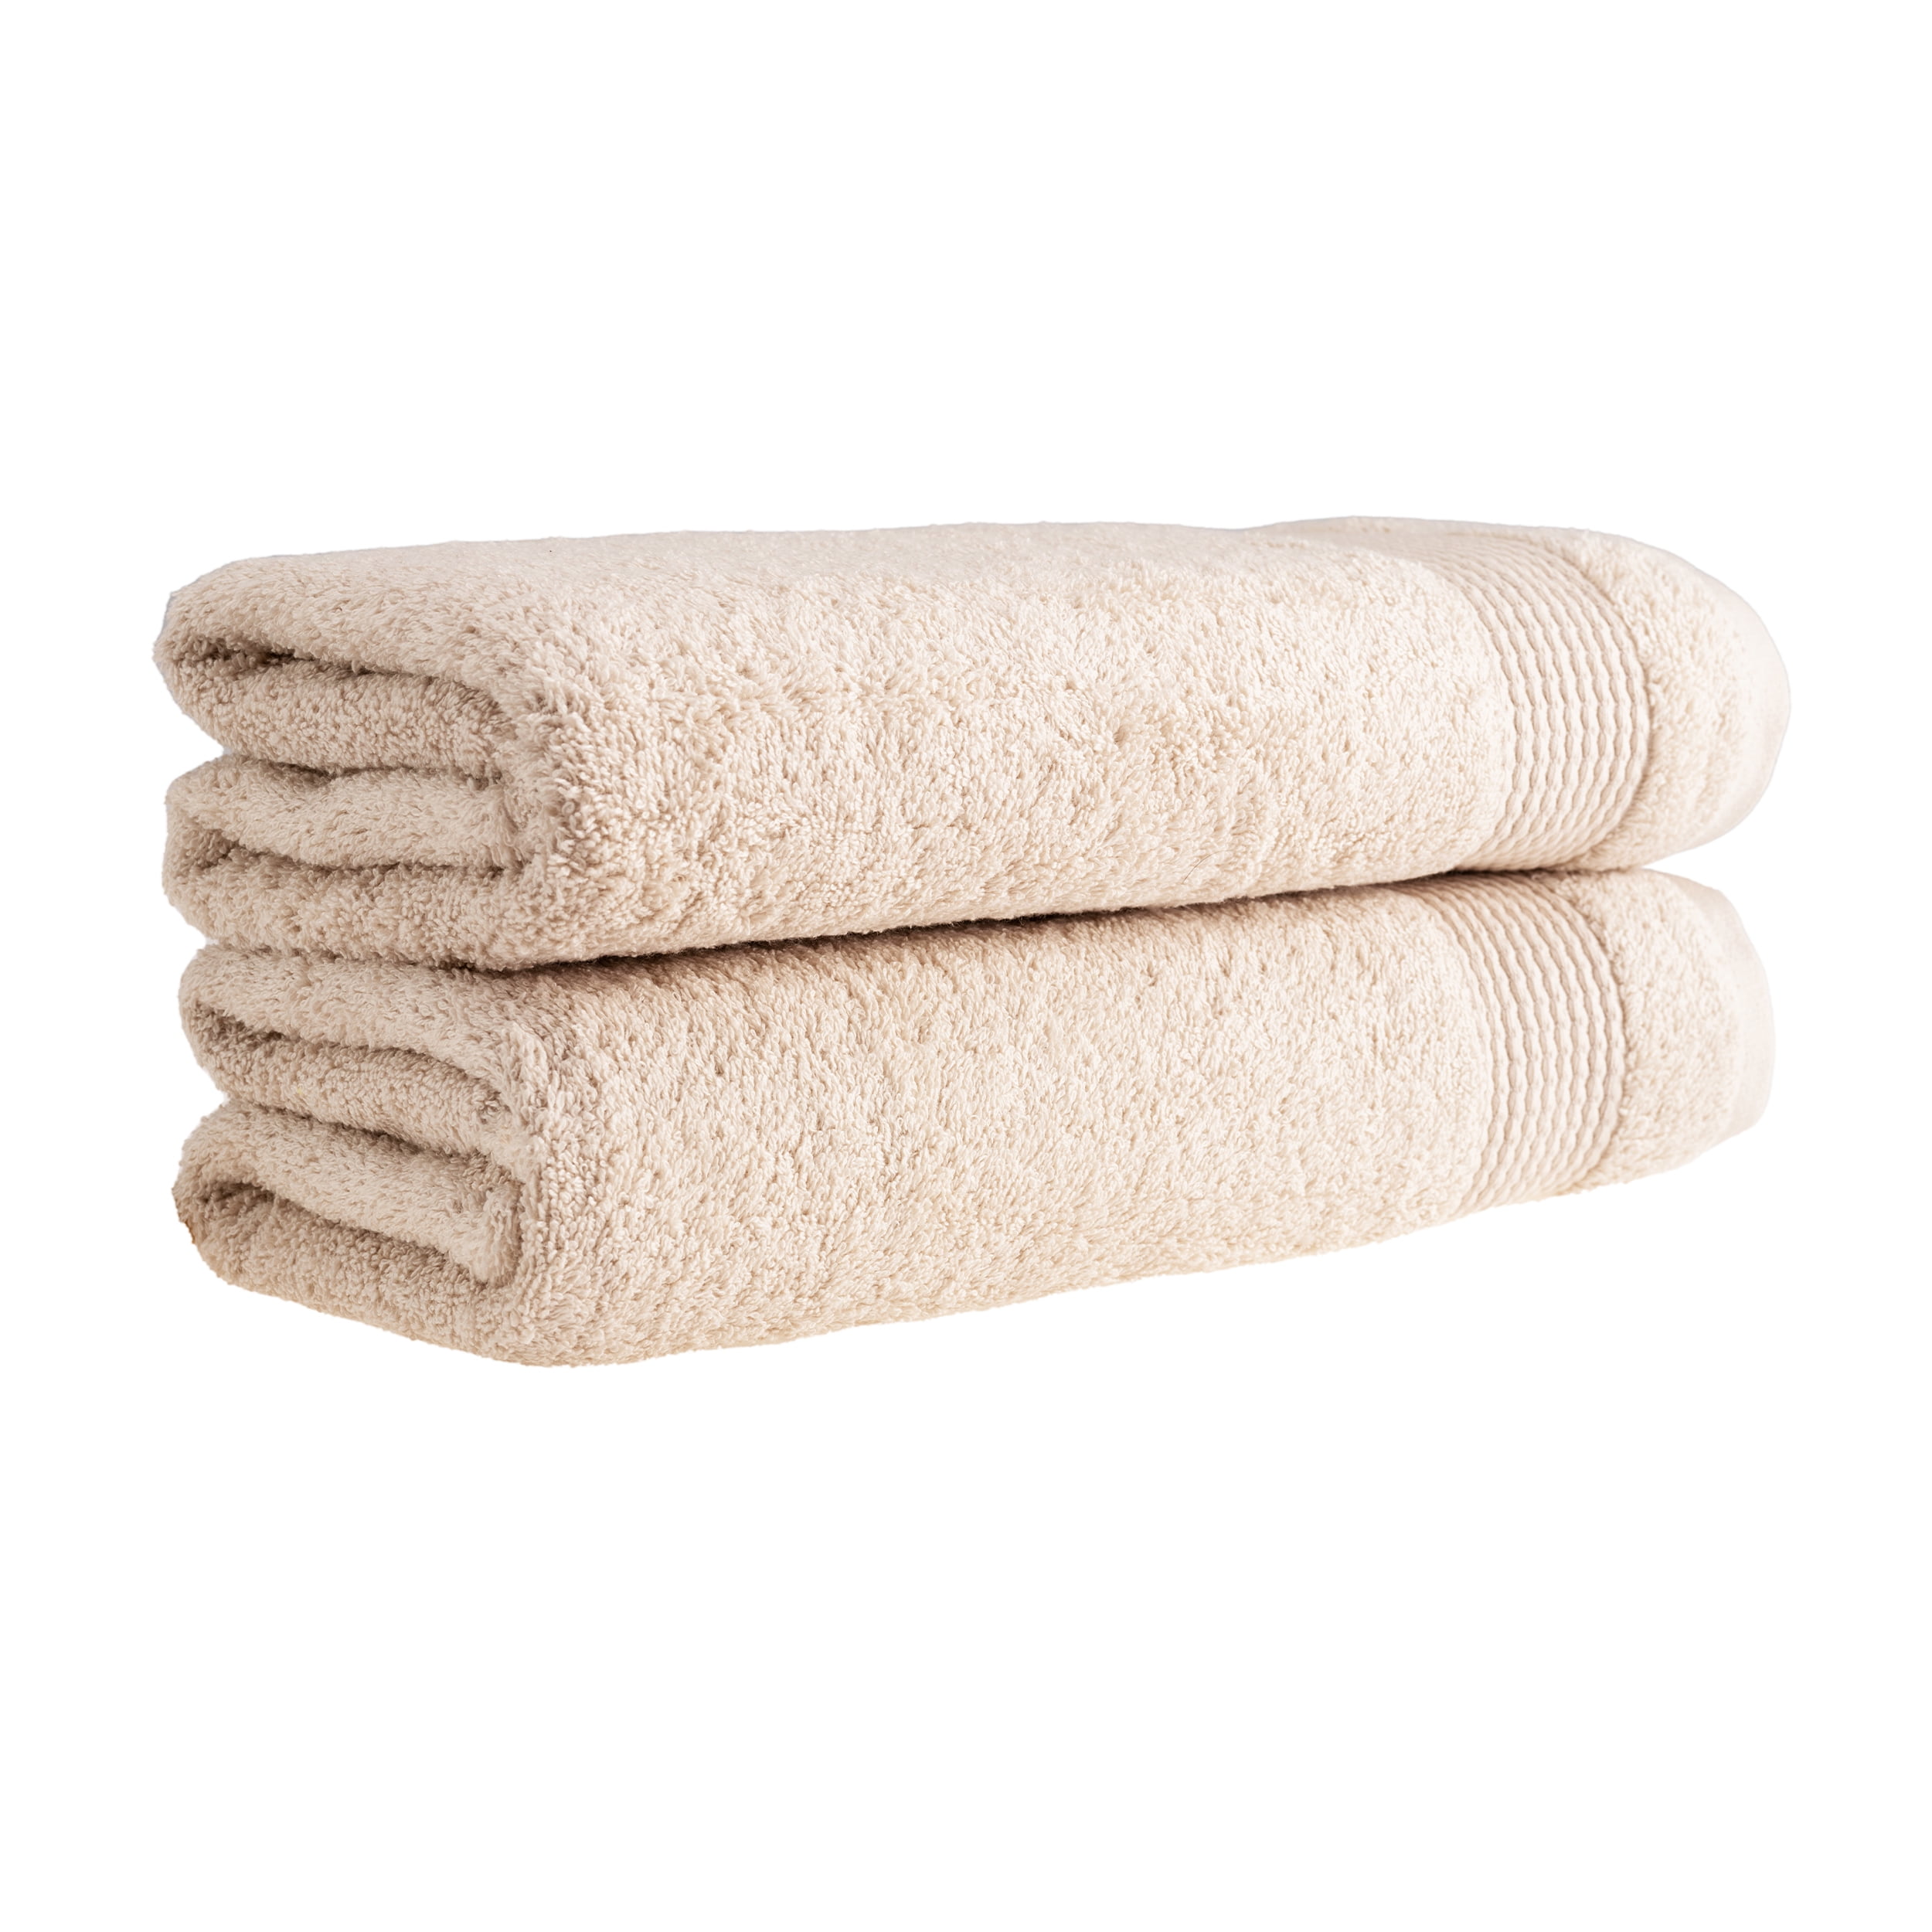 Bagno Milano Turkish Towels Luxury Hotel-Spa Towel Set, Non-GMO 100% Turkish Cotton | Ultra Soft Plush Absorbent Towels (Grey, 2 Pcs Bath Towel Set)